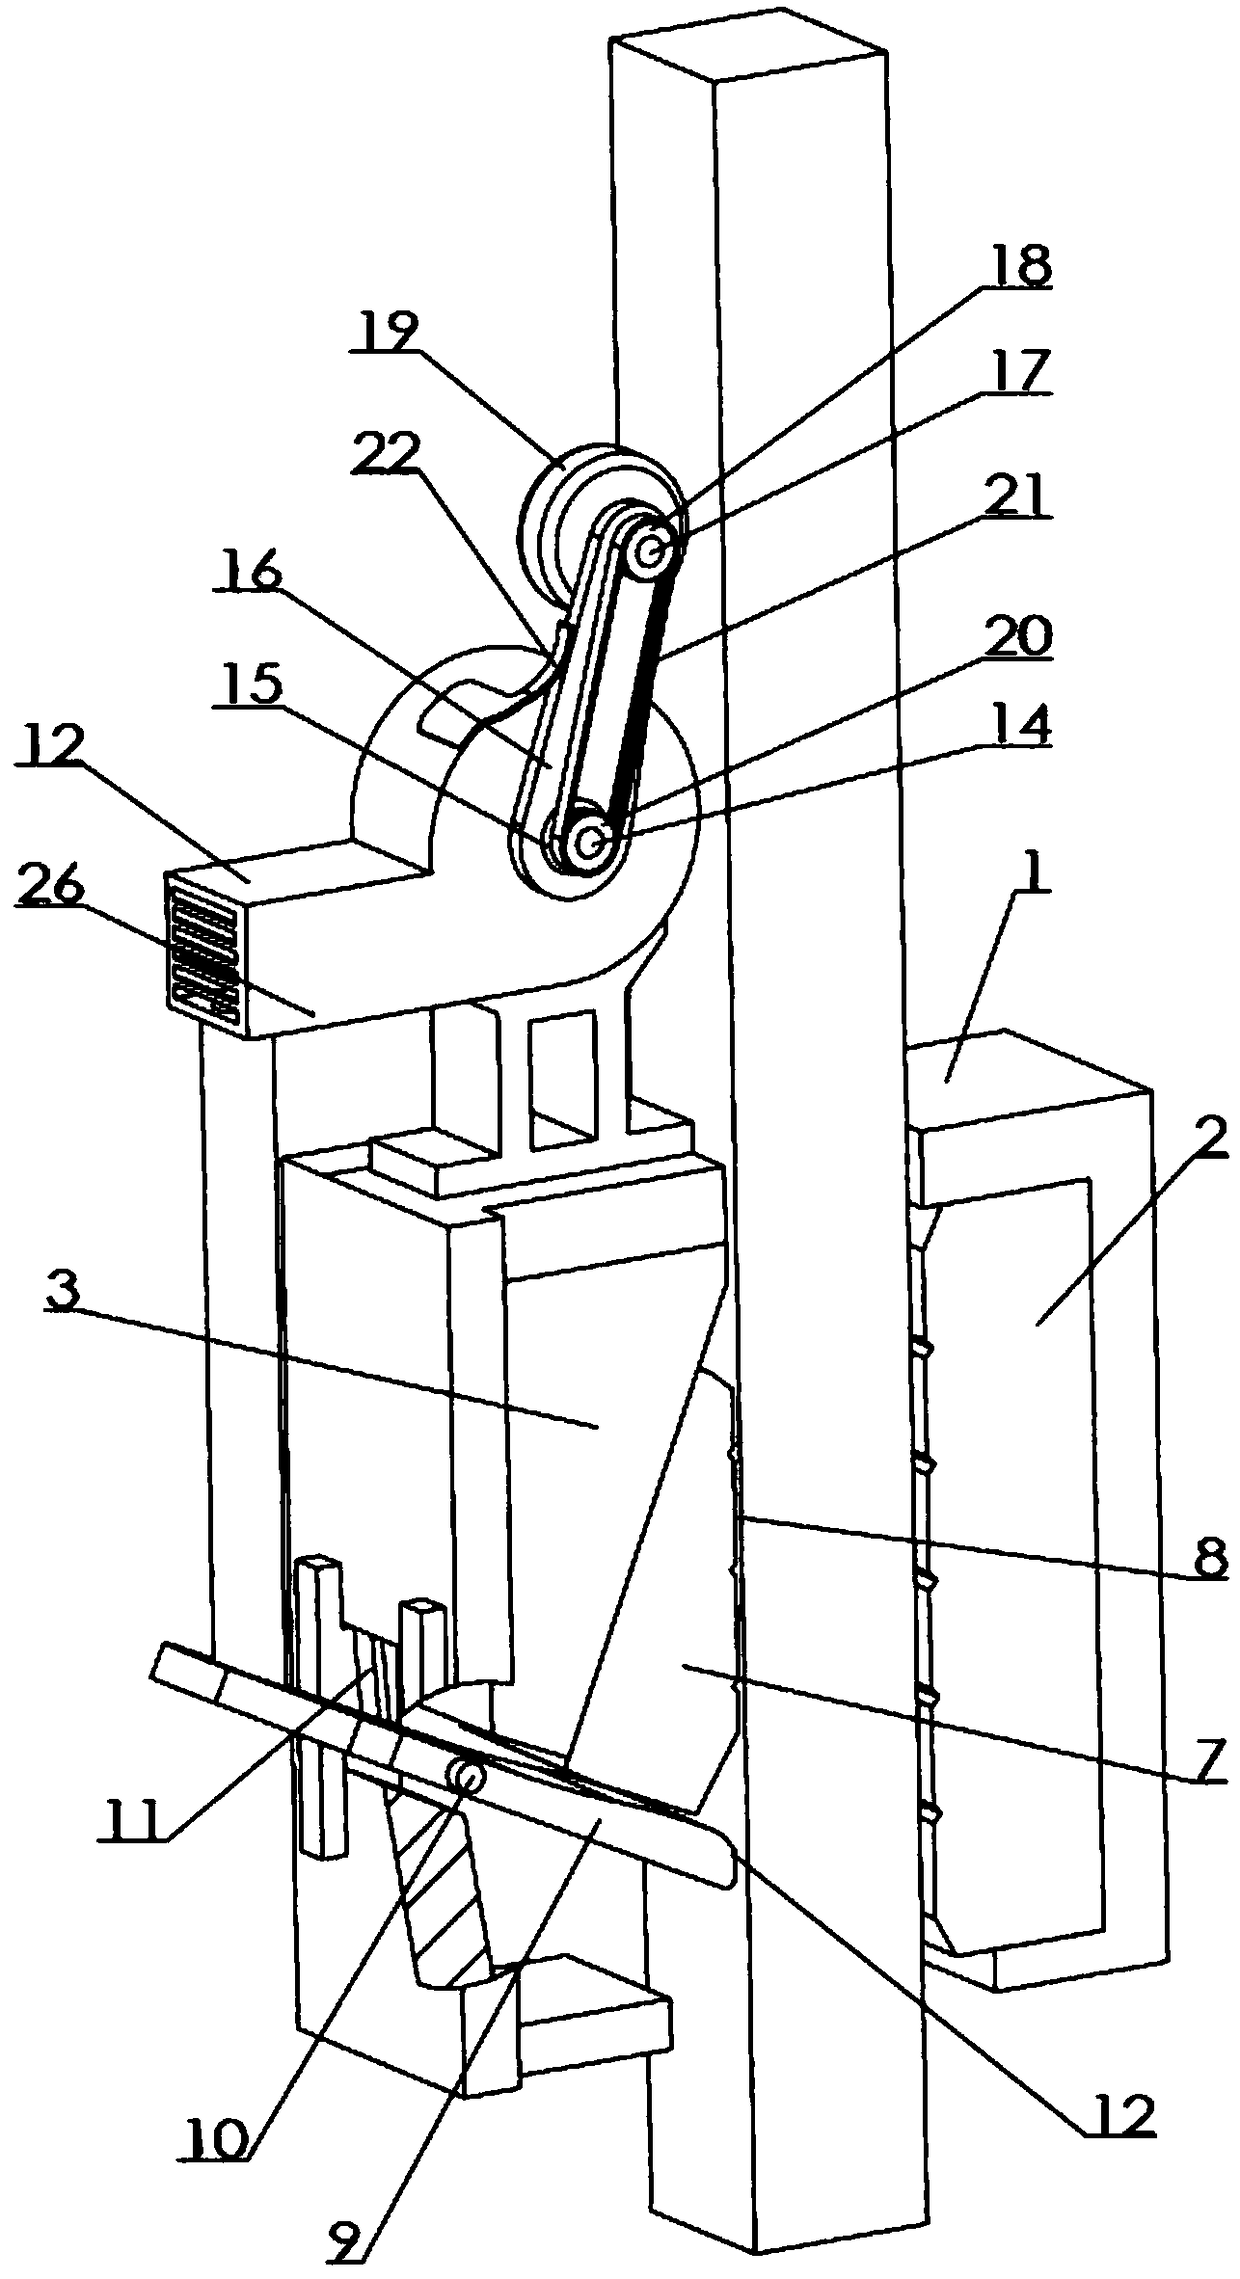 An anti-fall elevator holding mechanism